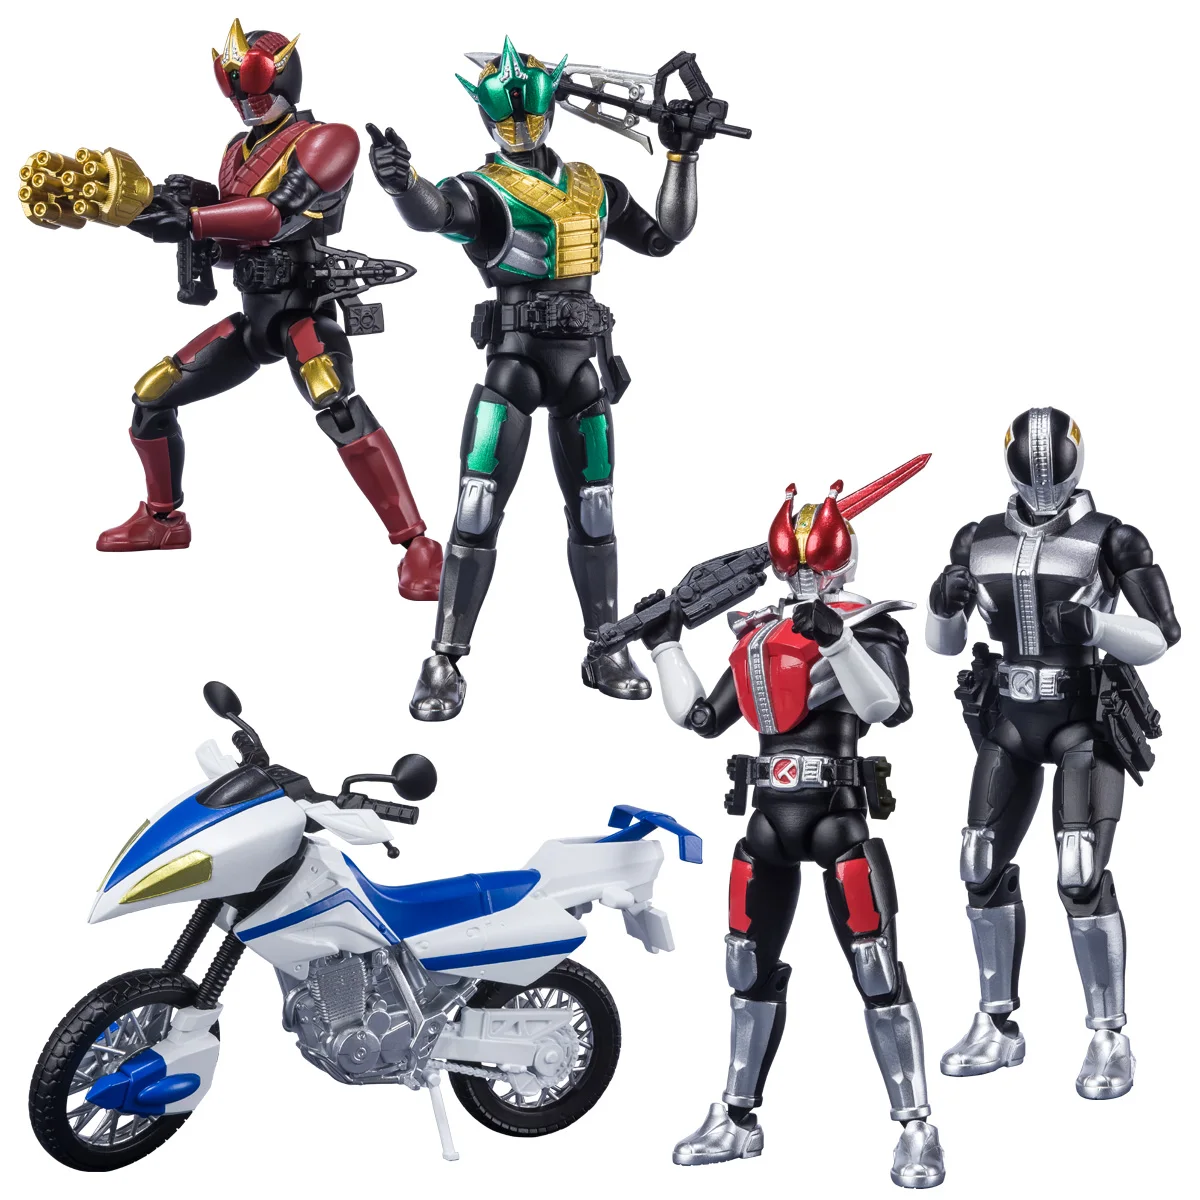 

Bandai Box Egg Shodo Palm X Kamen Rider Masked Rider Den-O Kreis Initial Zeronos Action Figure Joint Movable TOYS